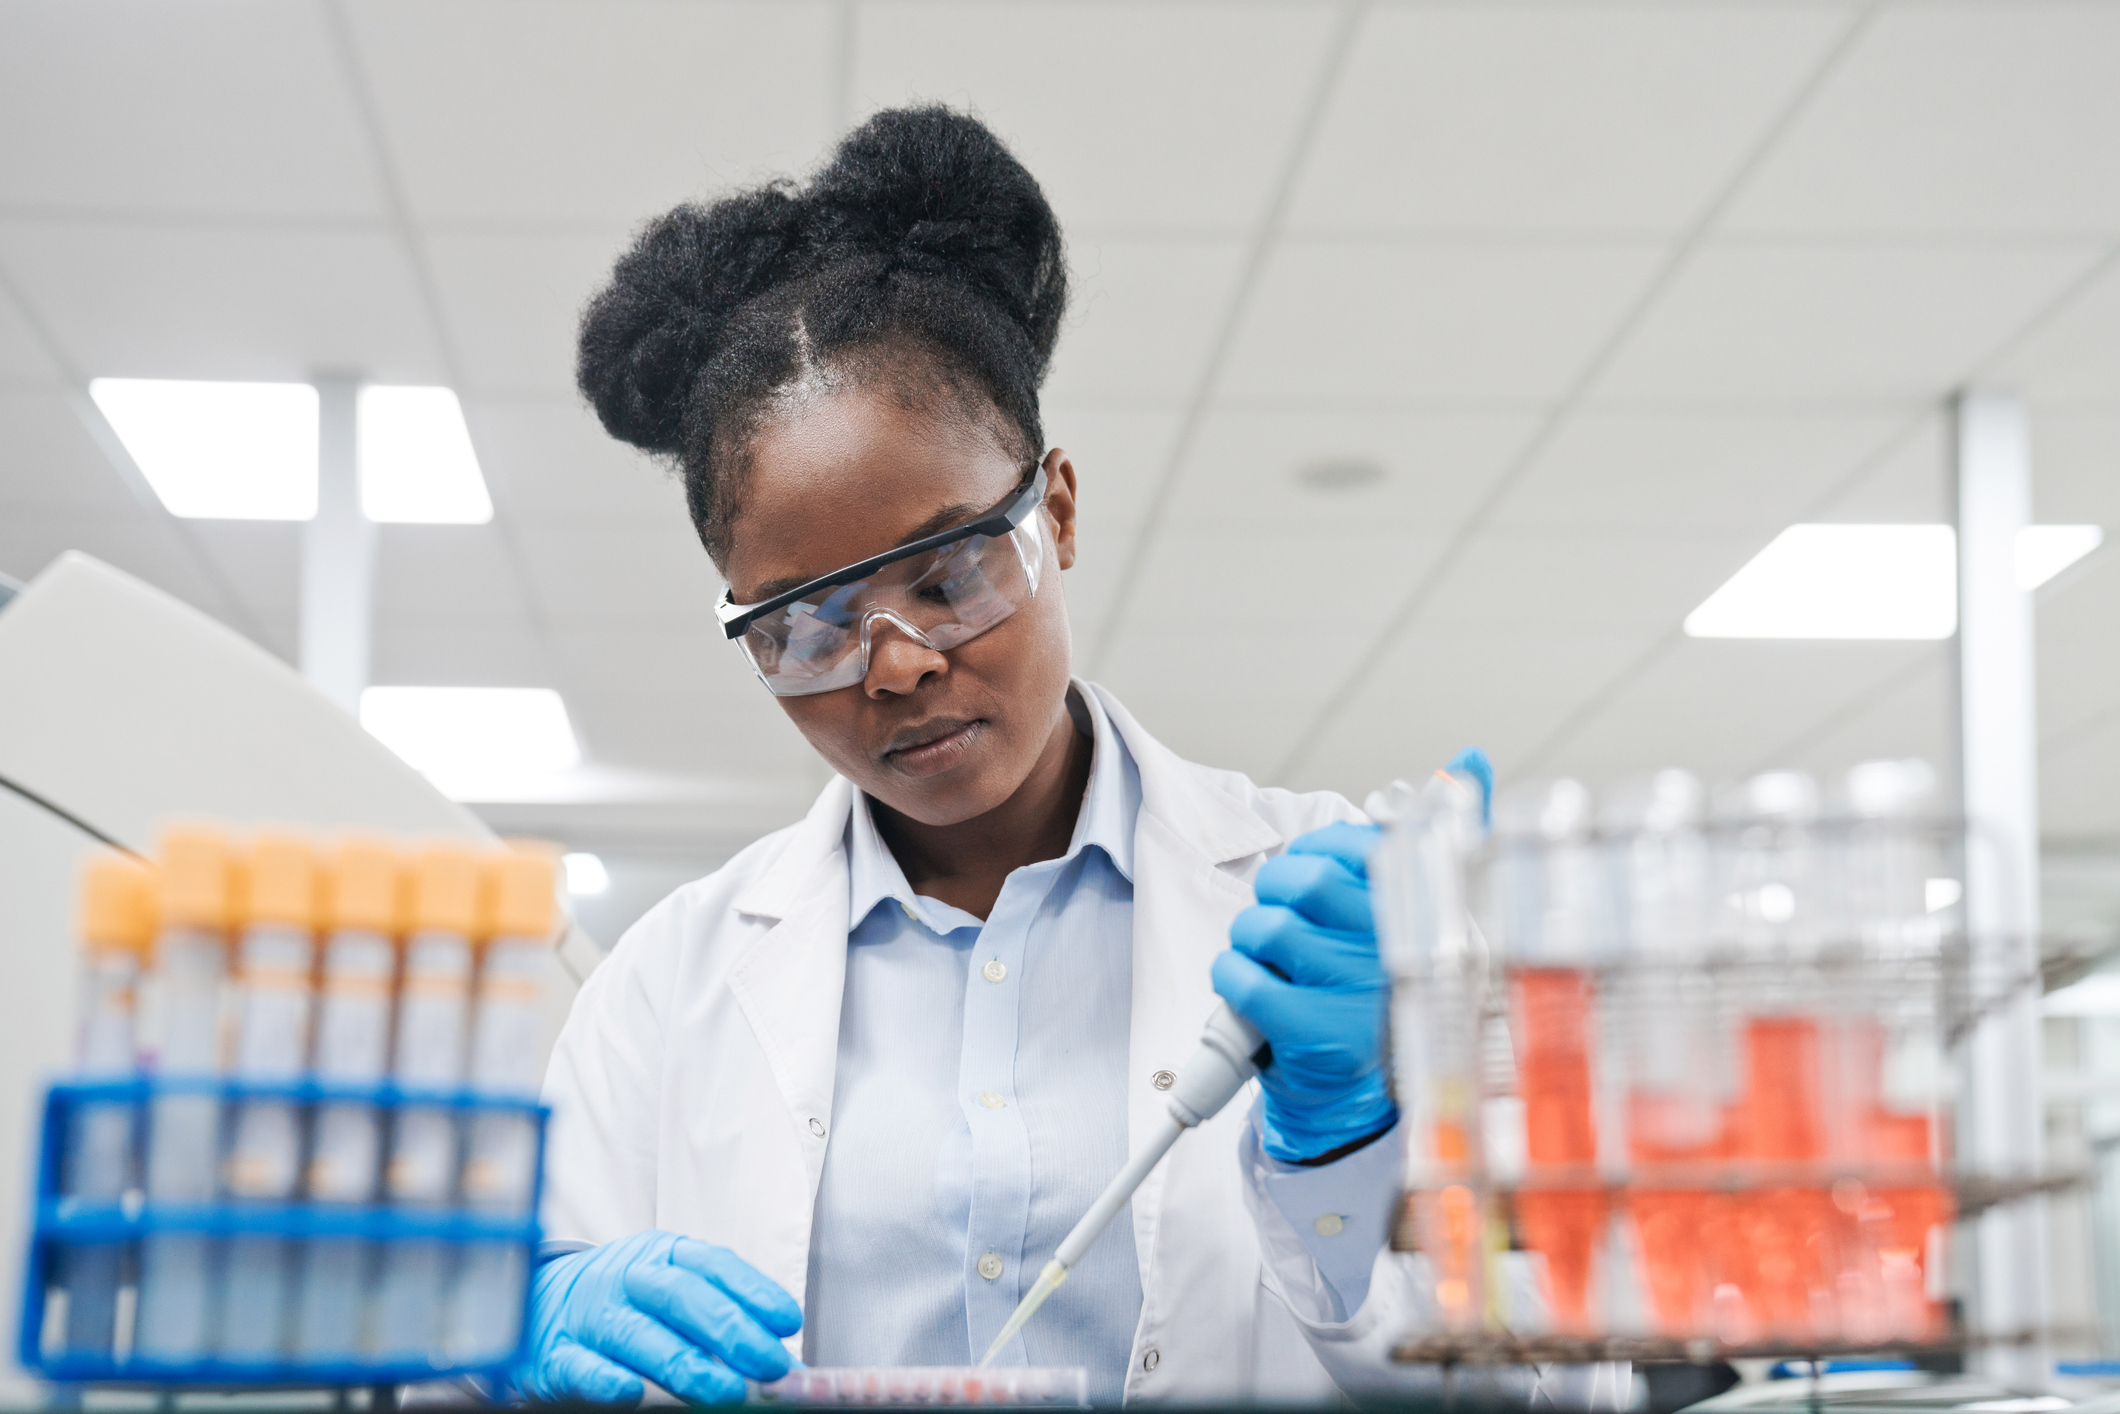 HBCU South Carolina State University Receives $8M For STEM Research